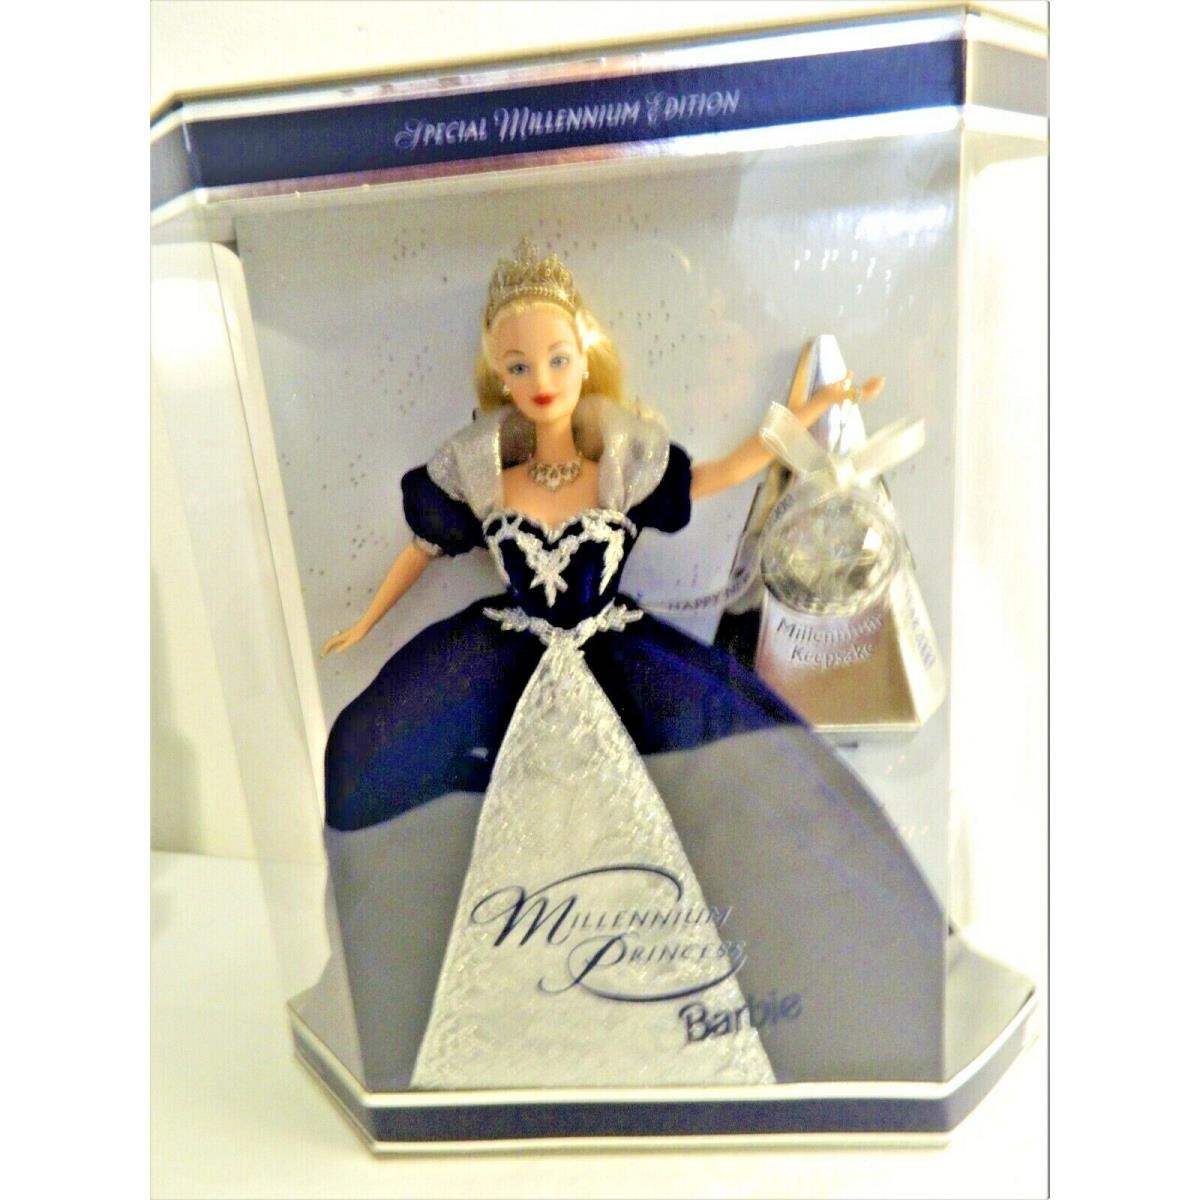 Millennium Princess Barbie 24154 - 2000 Special Millennium Edition Nrfb